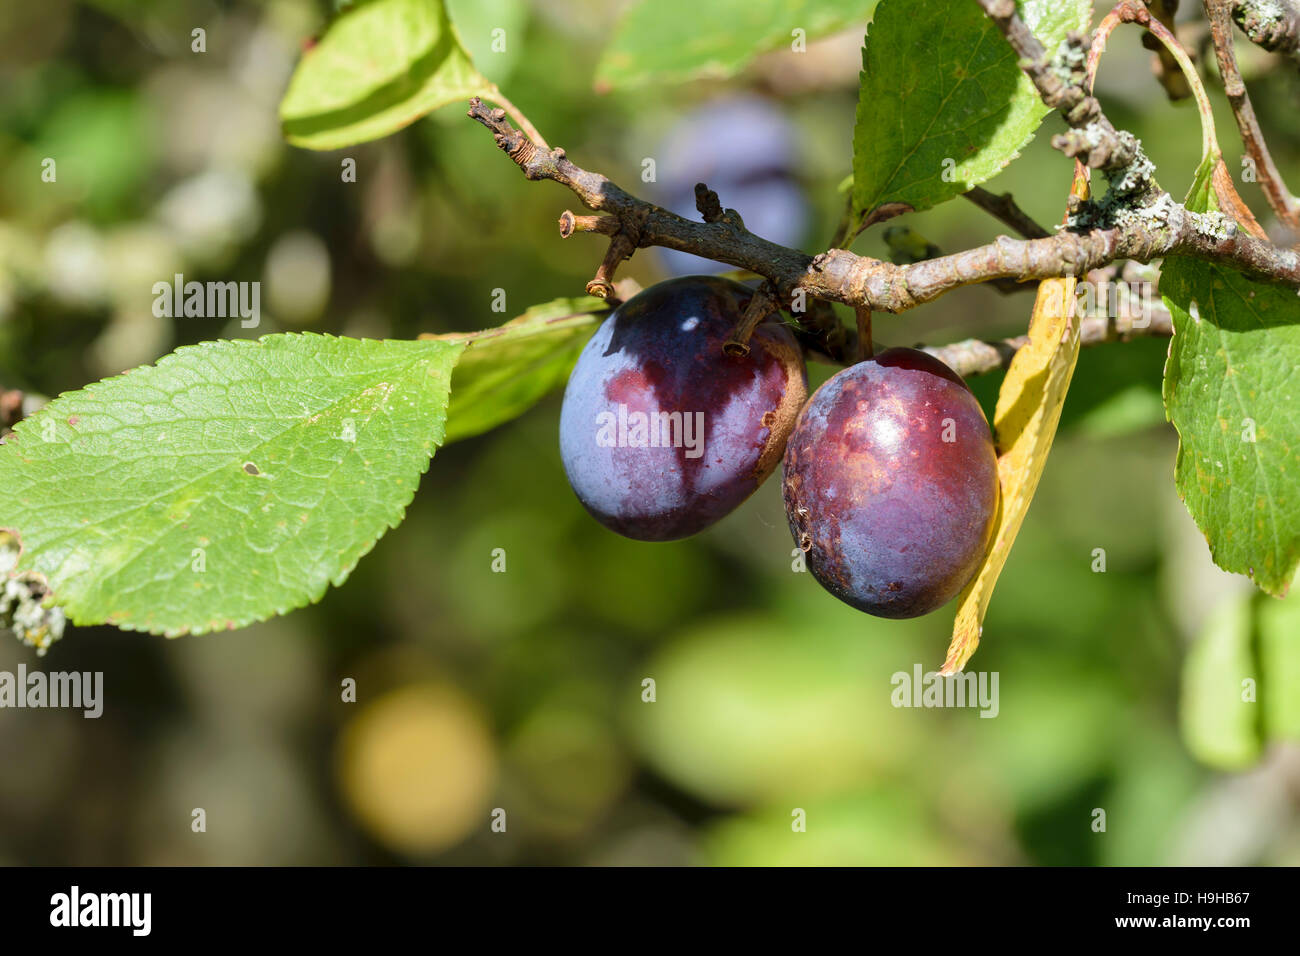 Damson Plum Prunus domestica frutta di piante legnose Foto Stock